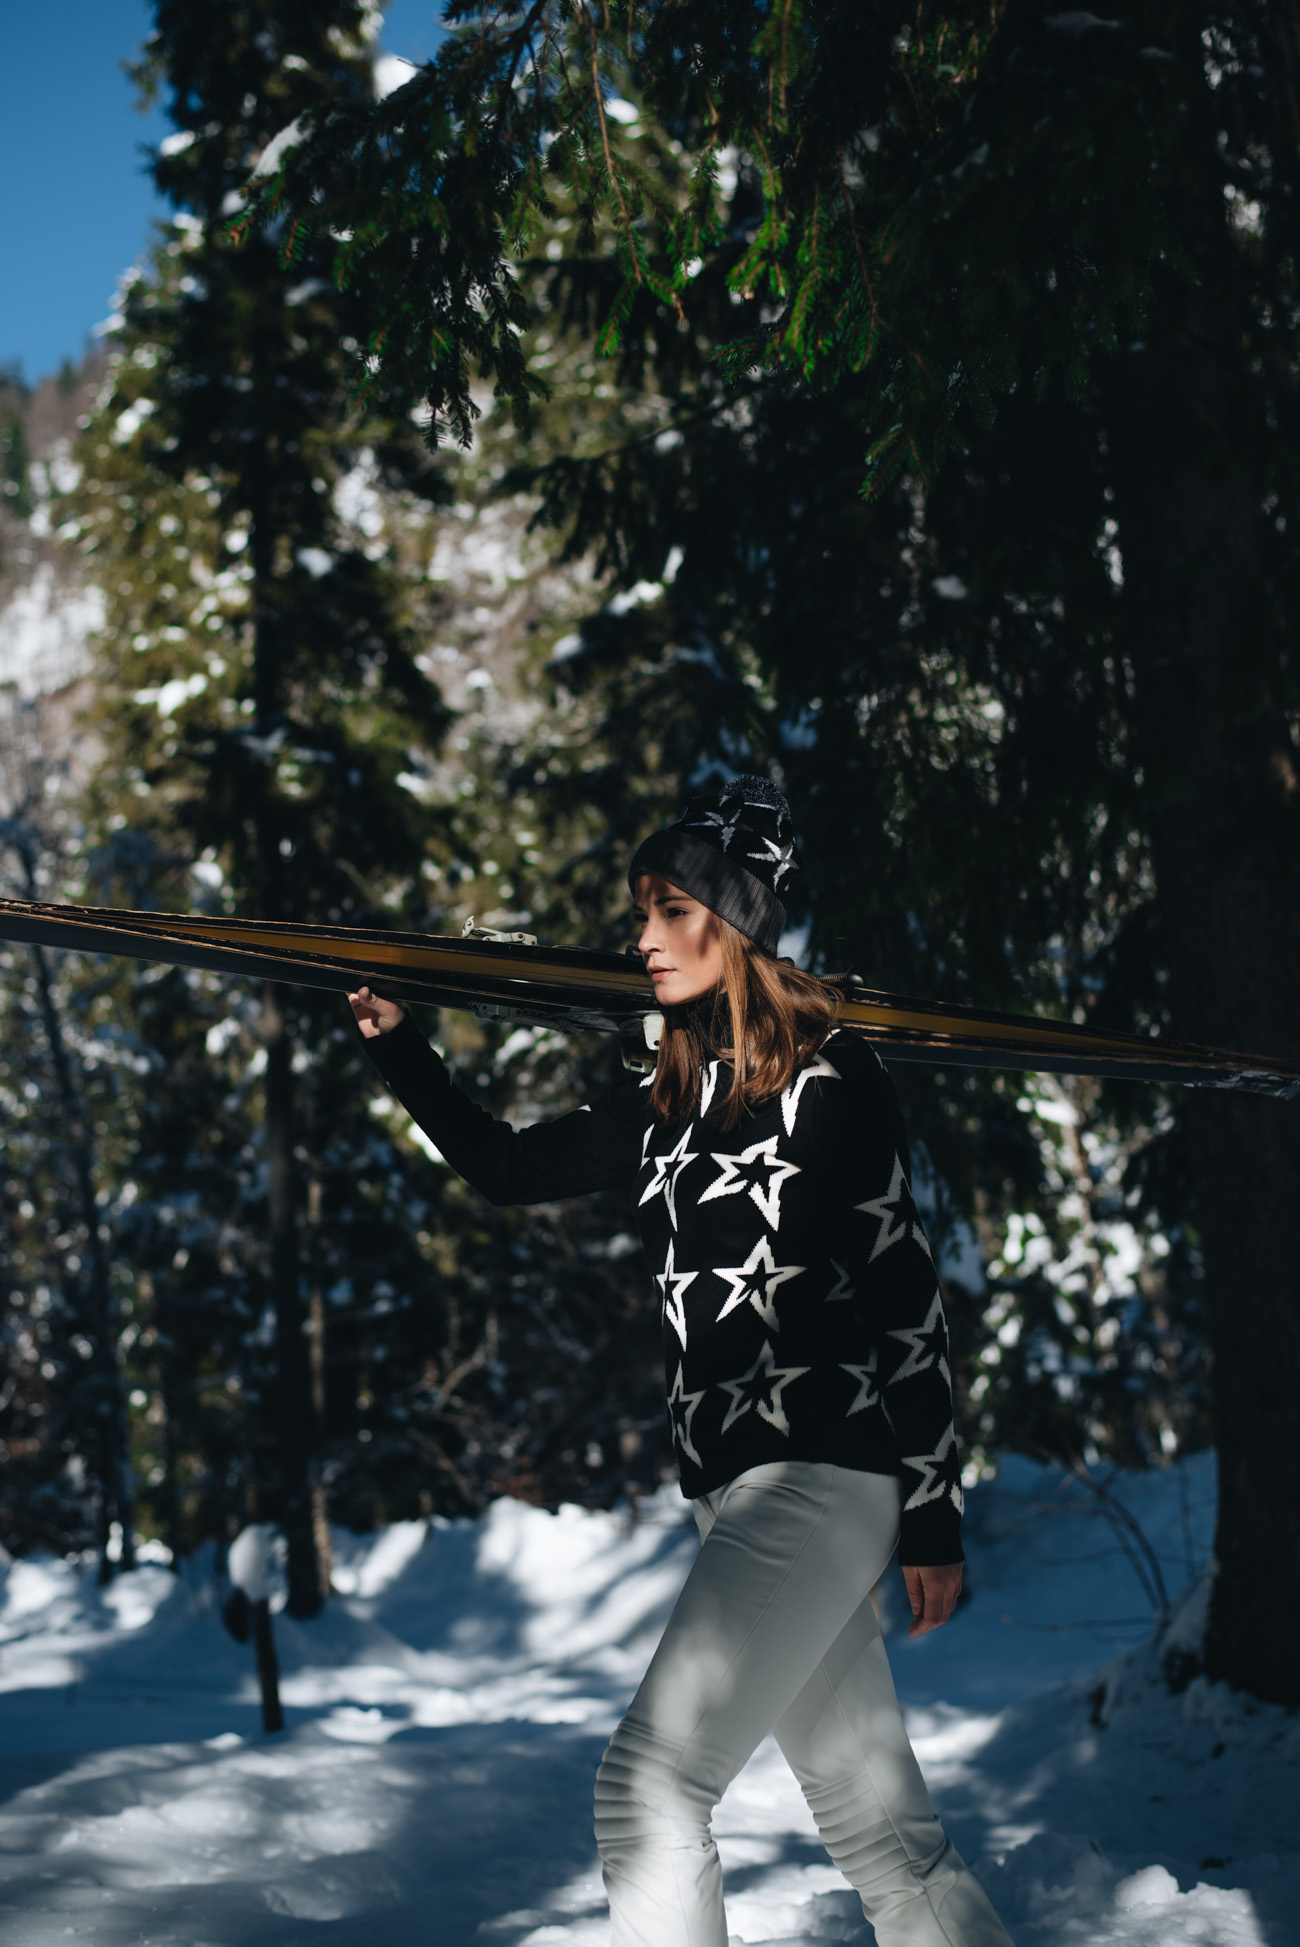 Winter-Schnee-Foto-Shooting-german-fashion-beauty-lifesyle-blogger-influencer-high-end-luxury-nina-schwichtenberg-fashiioncarpet-